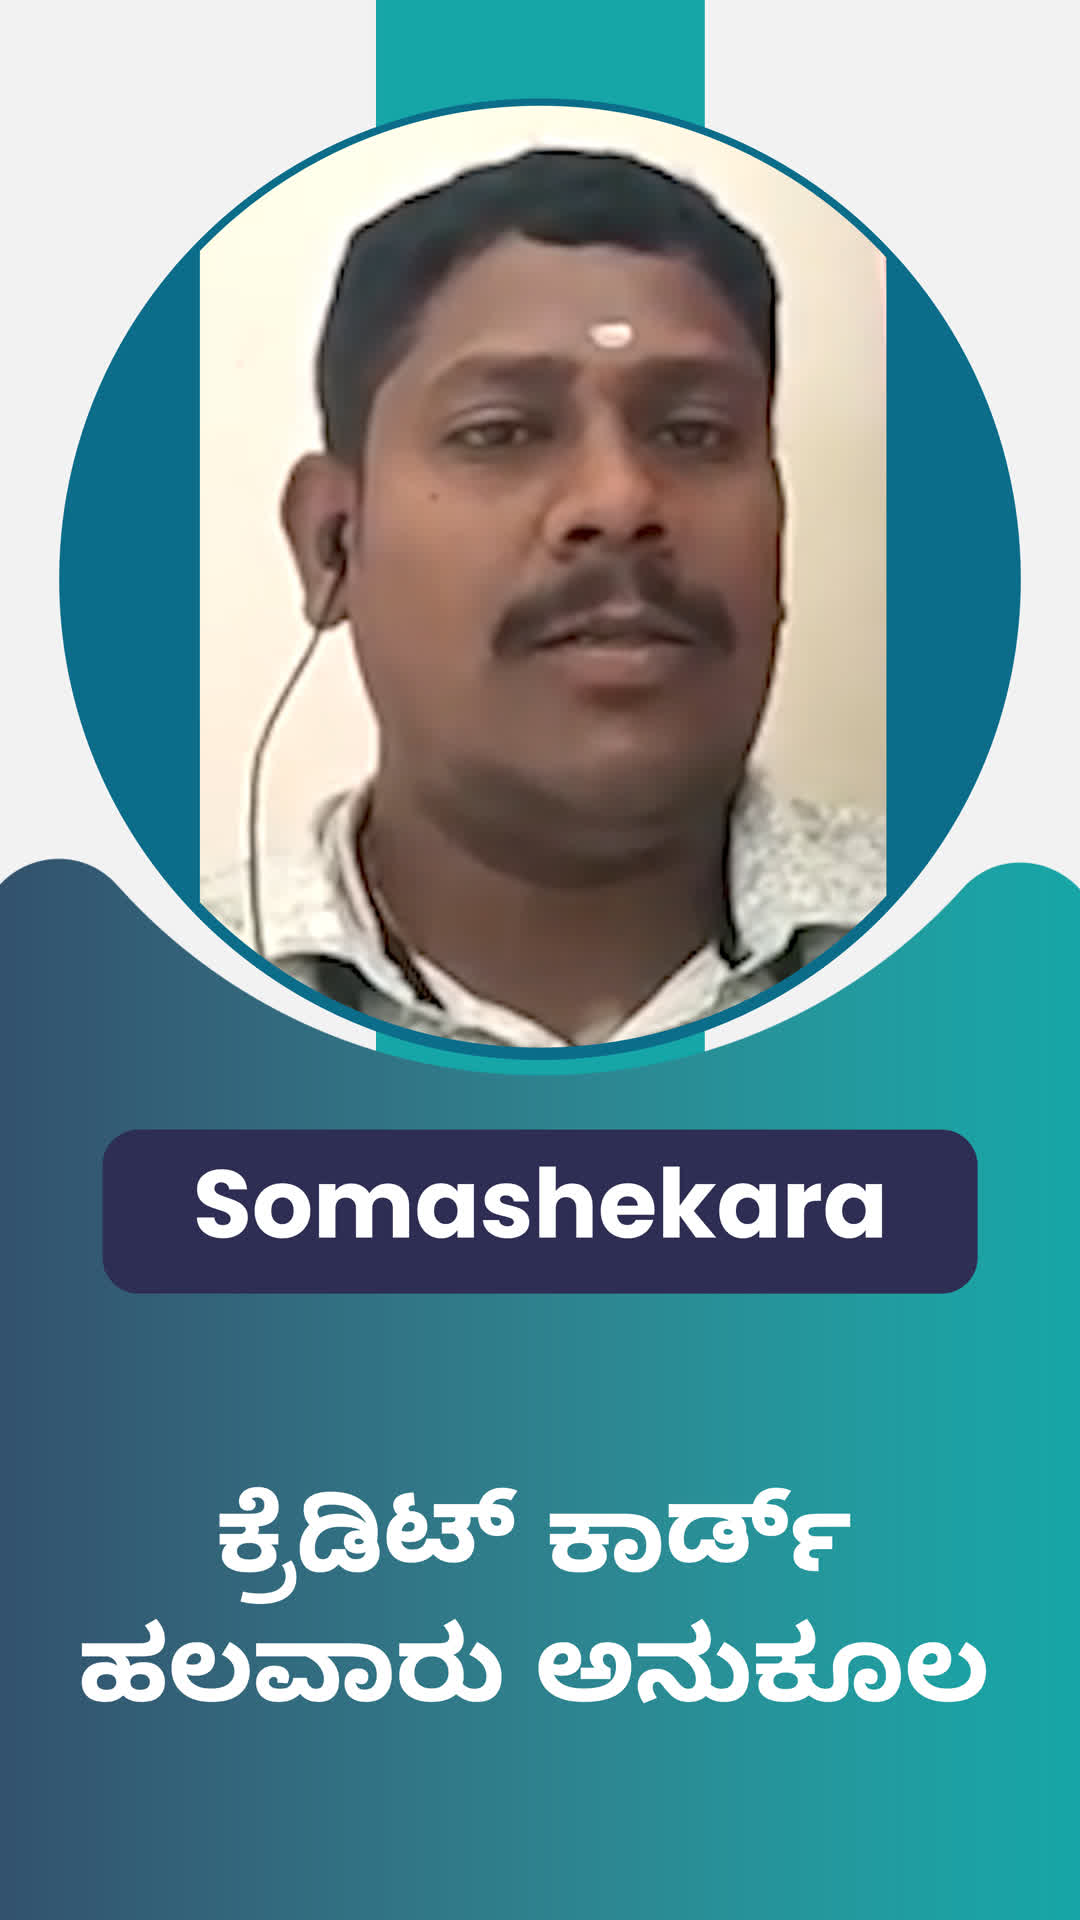 Somashekara C's Honest Review of ffreedom app - Chikballapur ,Karnataka